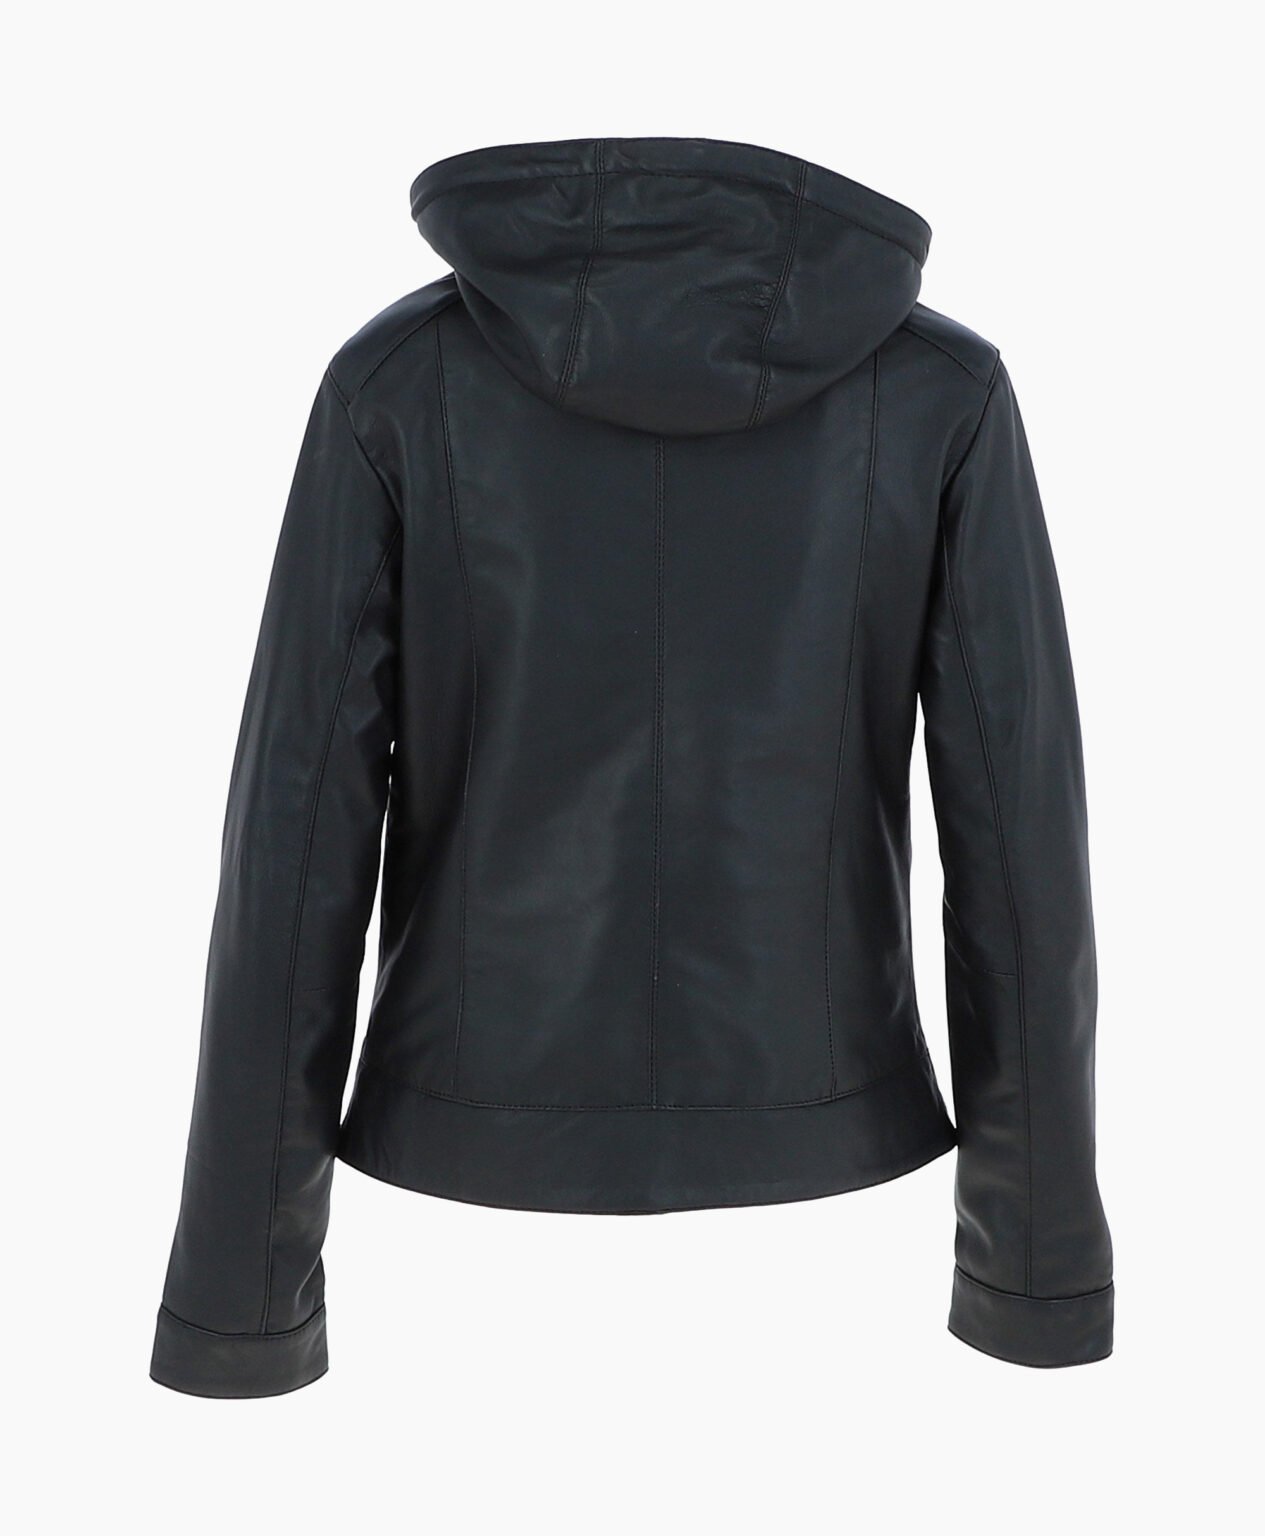 vogue-jacket-leather-hooded-jacket-black-sarasota-image202